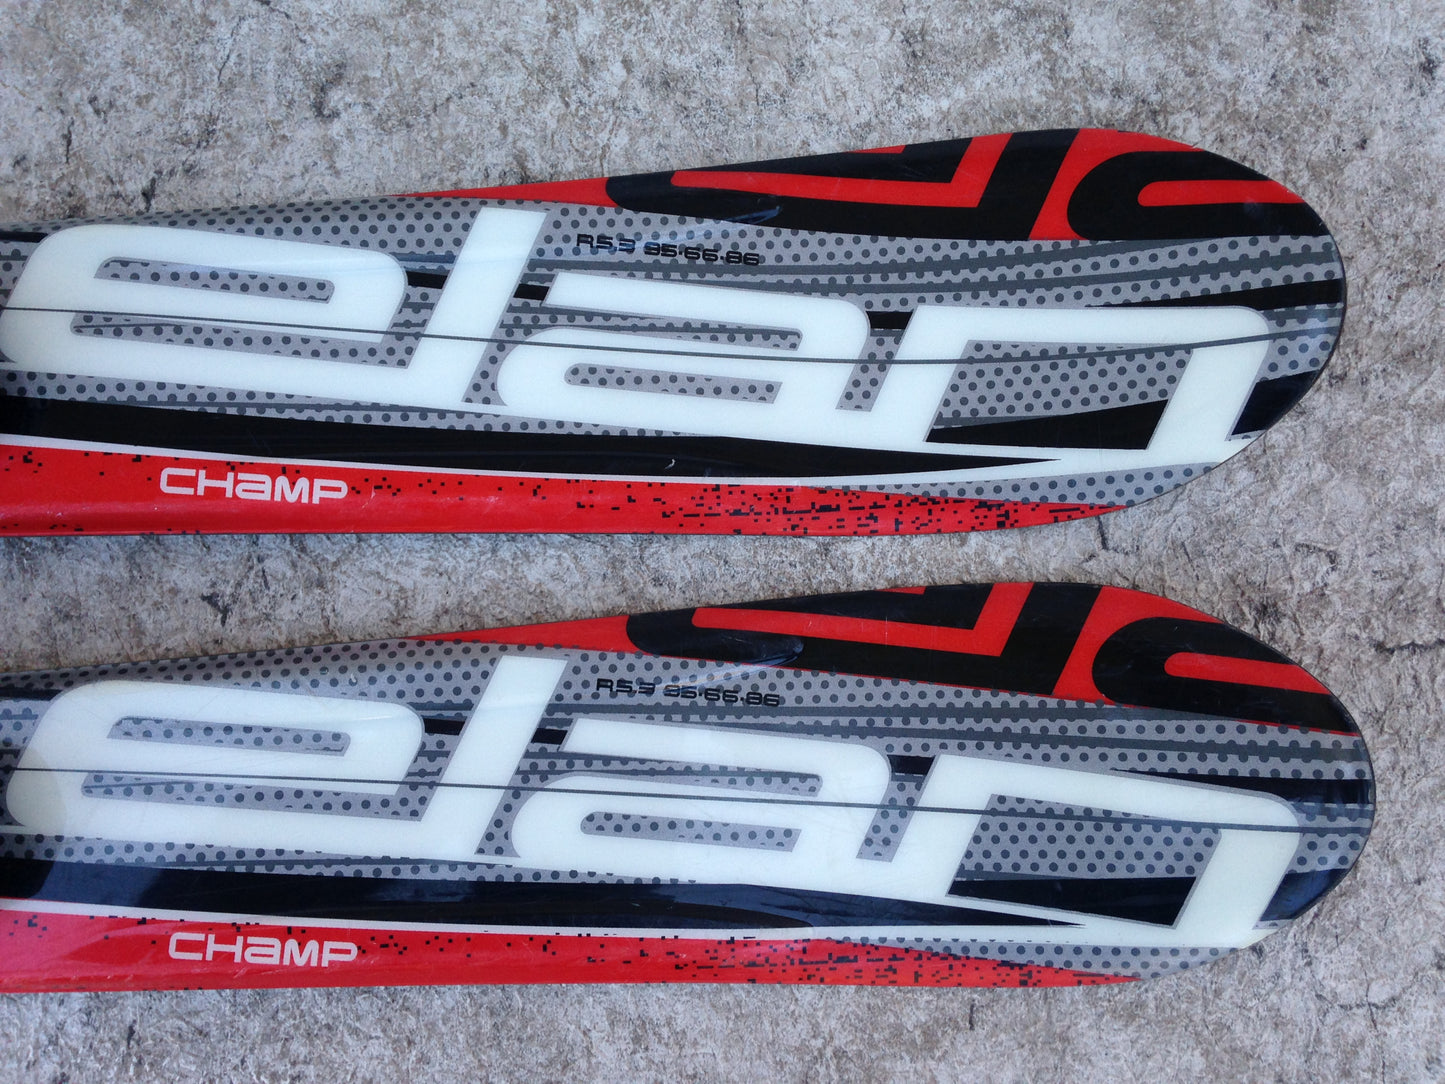 Ski 090 Elan Champ Parabolic Red Black White With Bindings Excellent